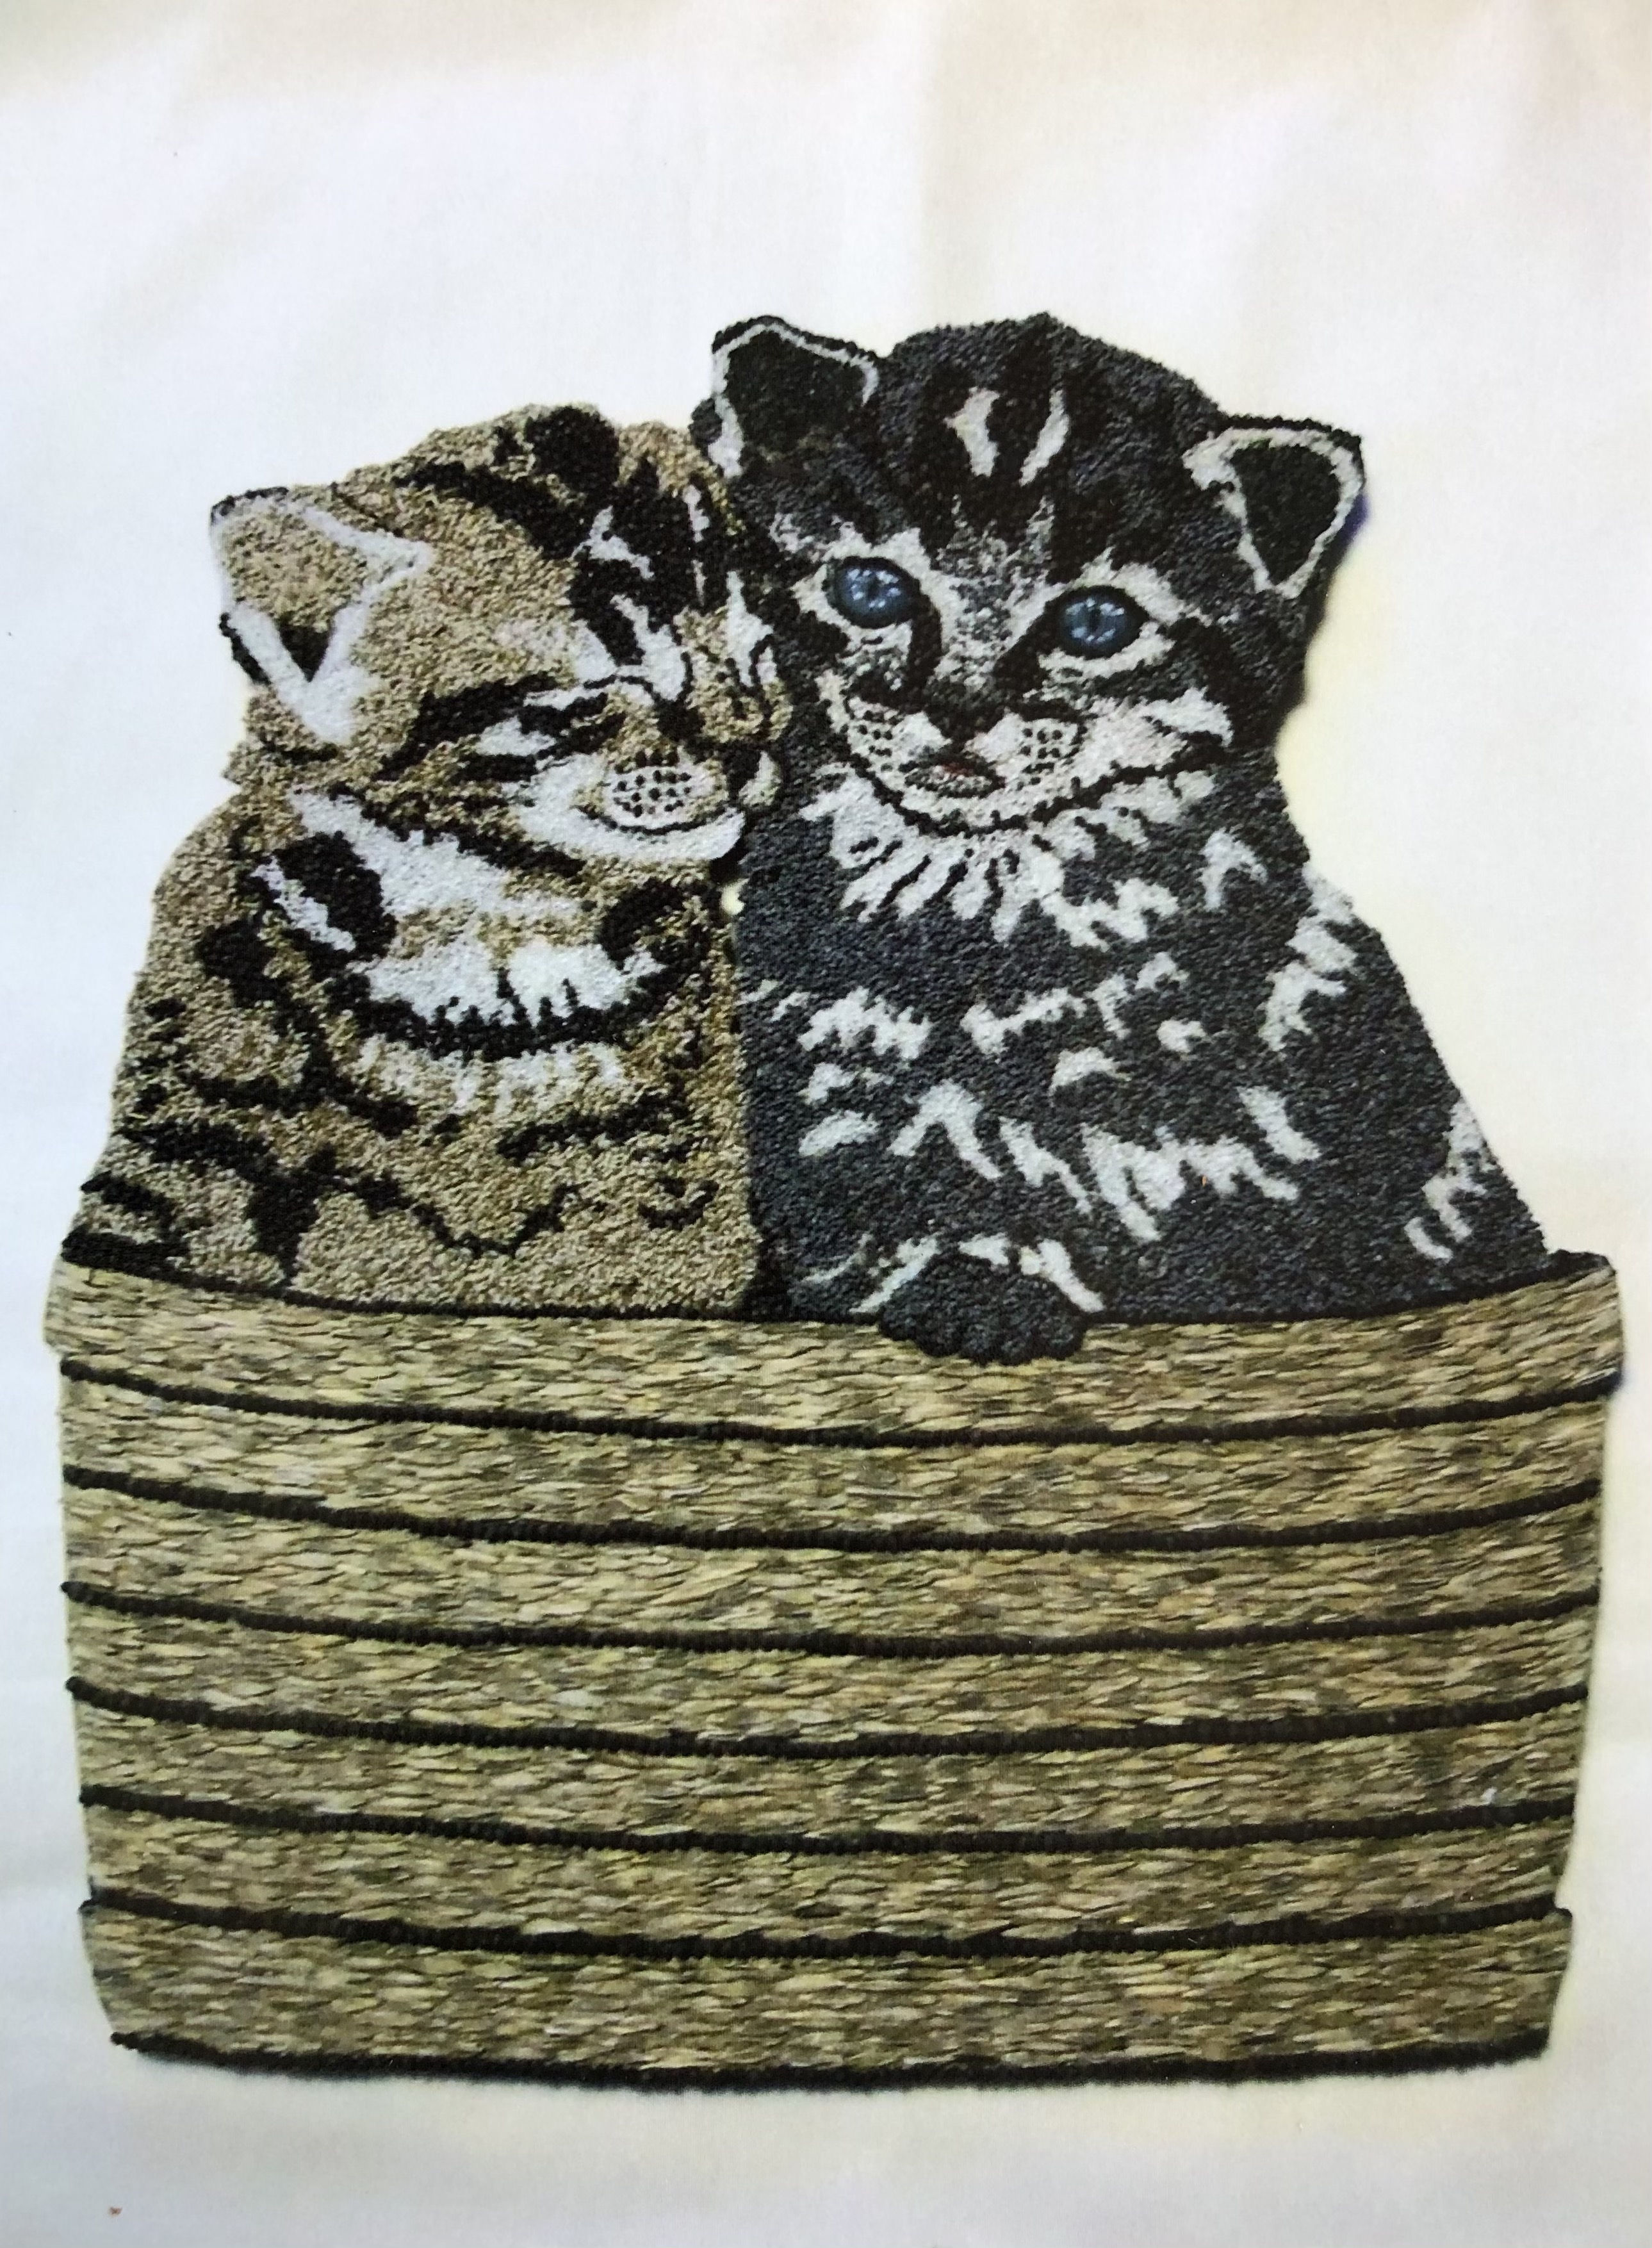 [Linda Paulsen Two Kittens image]